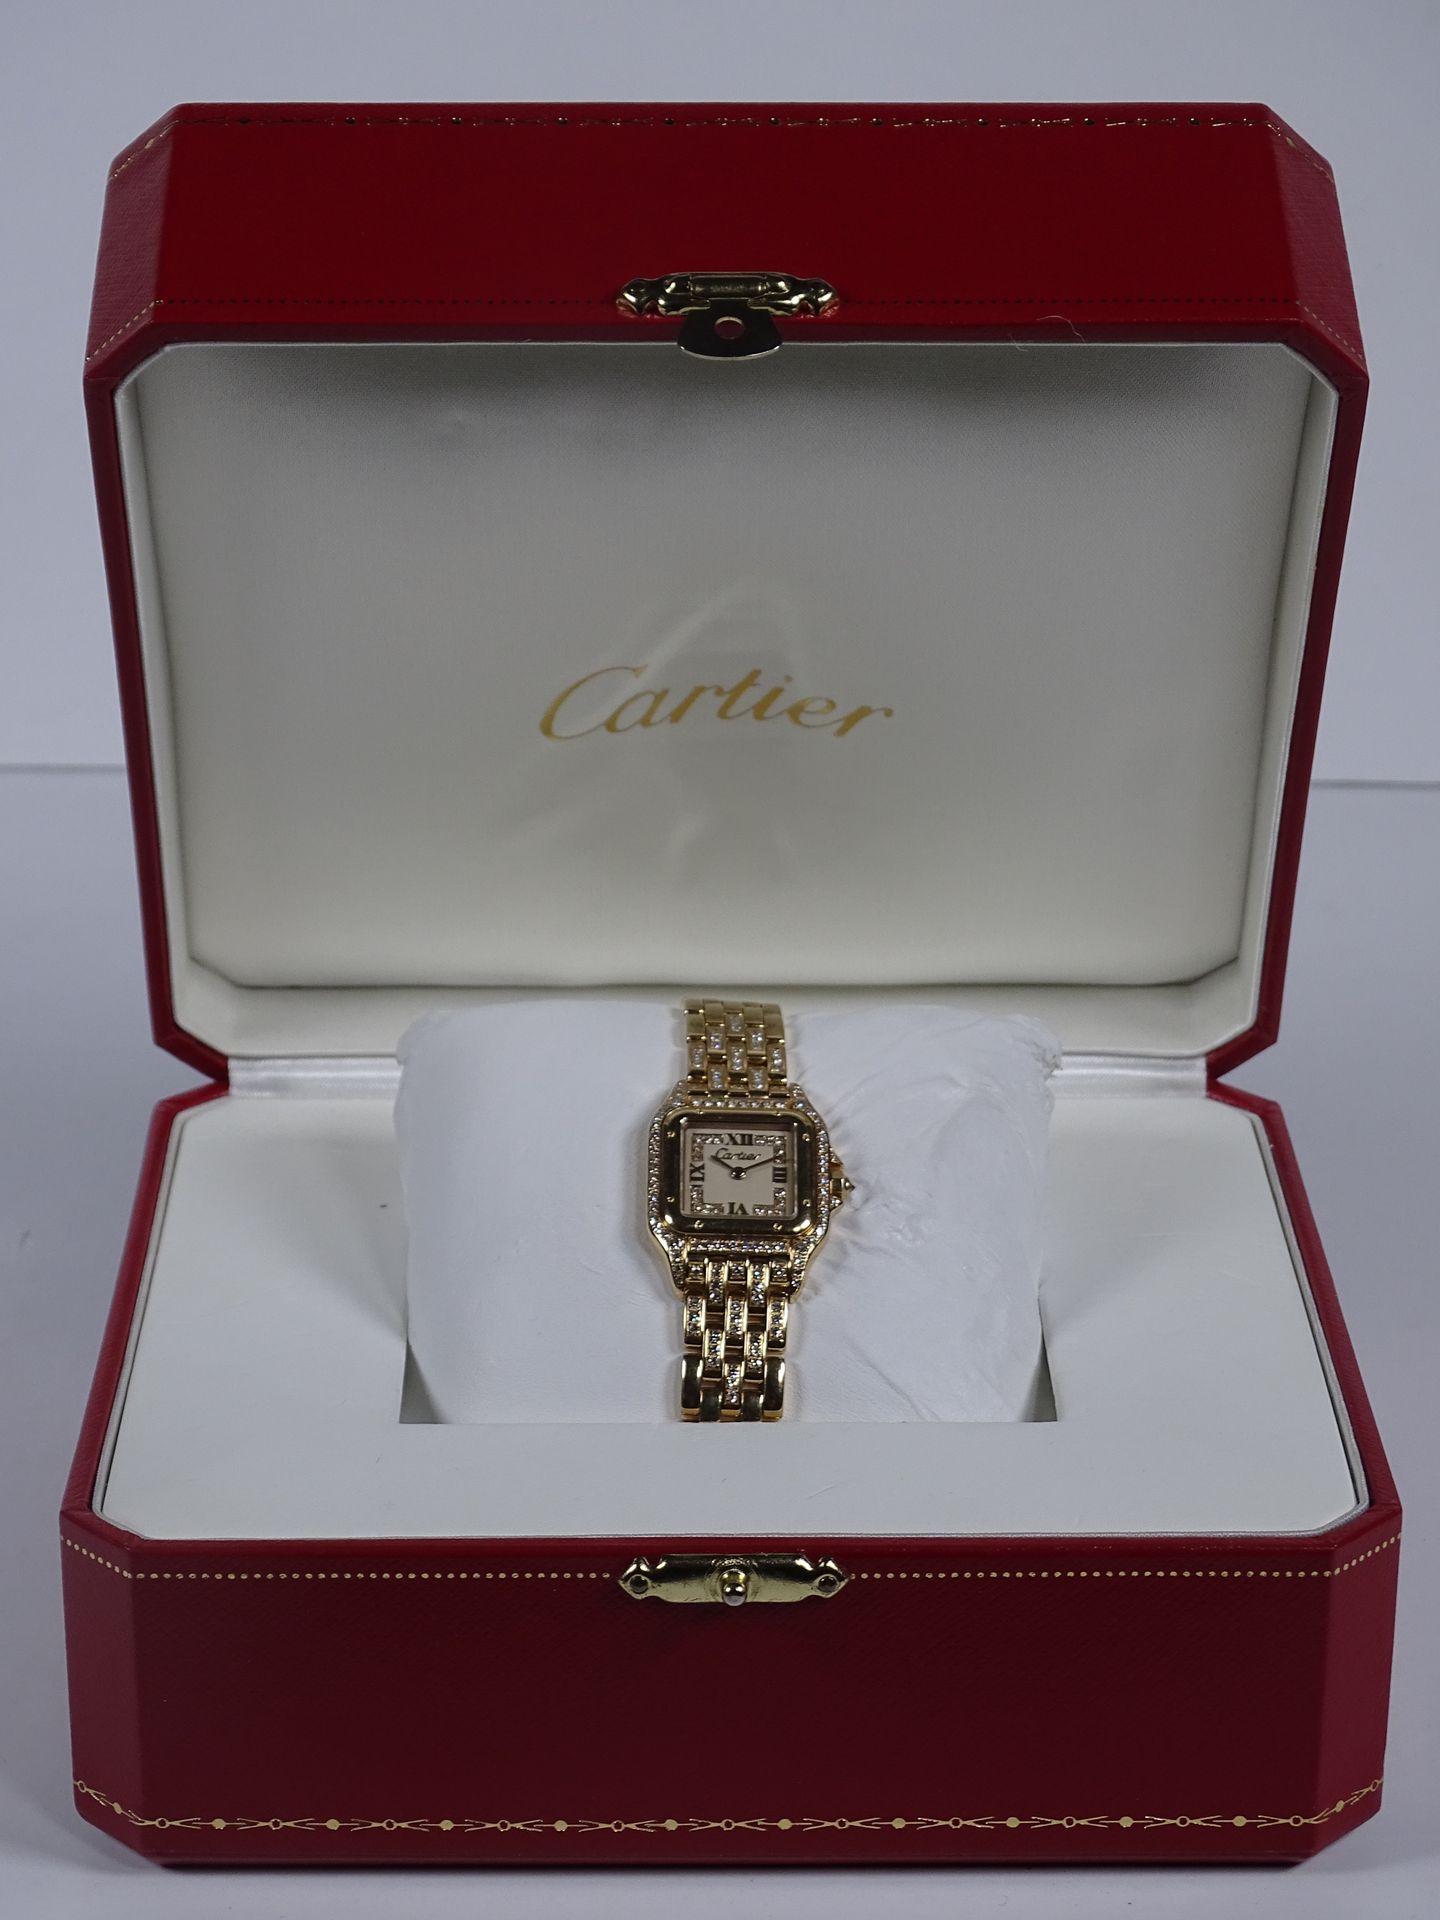 CARTIER Damenarmbanduhr aus Gold.

Modell Panthère von Maison Cartier.

Das Gehä&hellip;